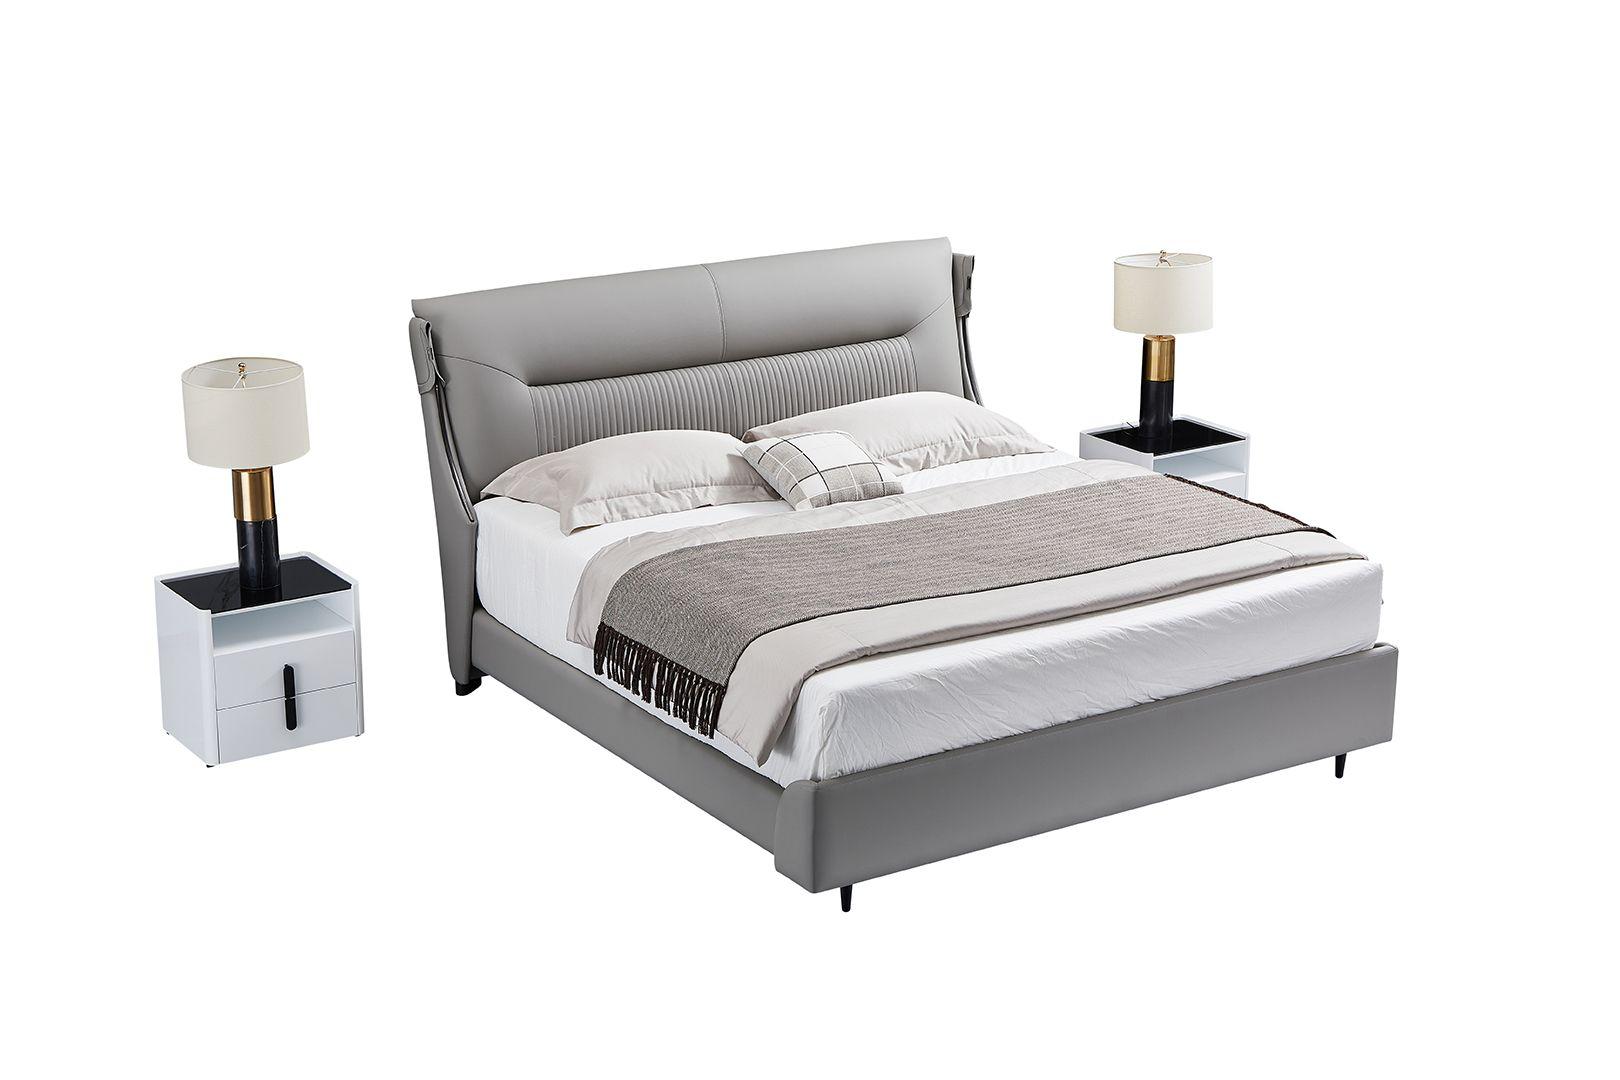 

    
American Eagle Furniture B-Y2001-CK Platform Bed Gray B-Y2001-CK
